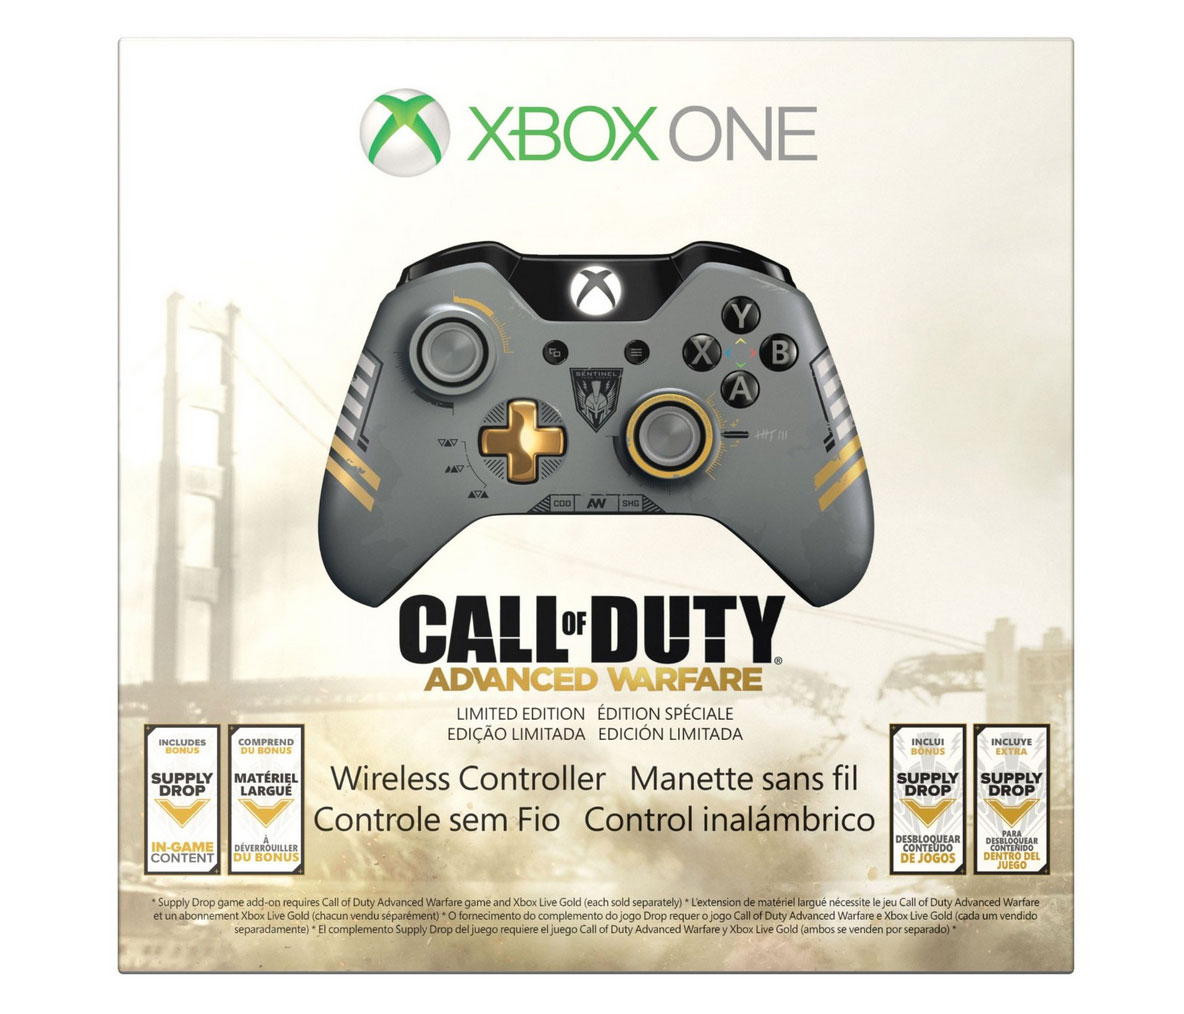 Xbox One Limited Edition Call of Duty: Advanced Warfare Wireless Controller box